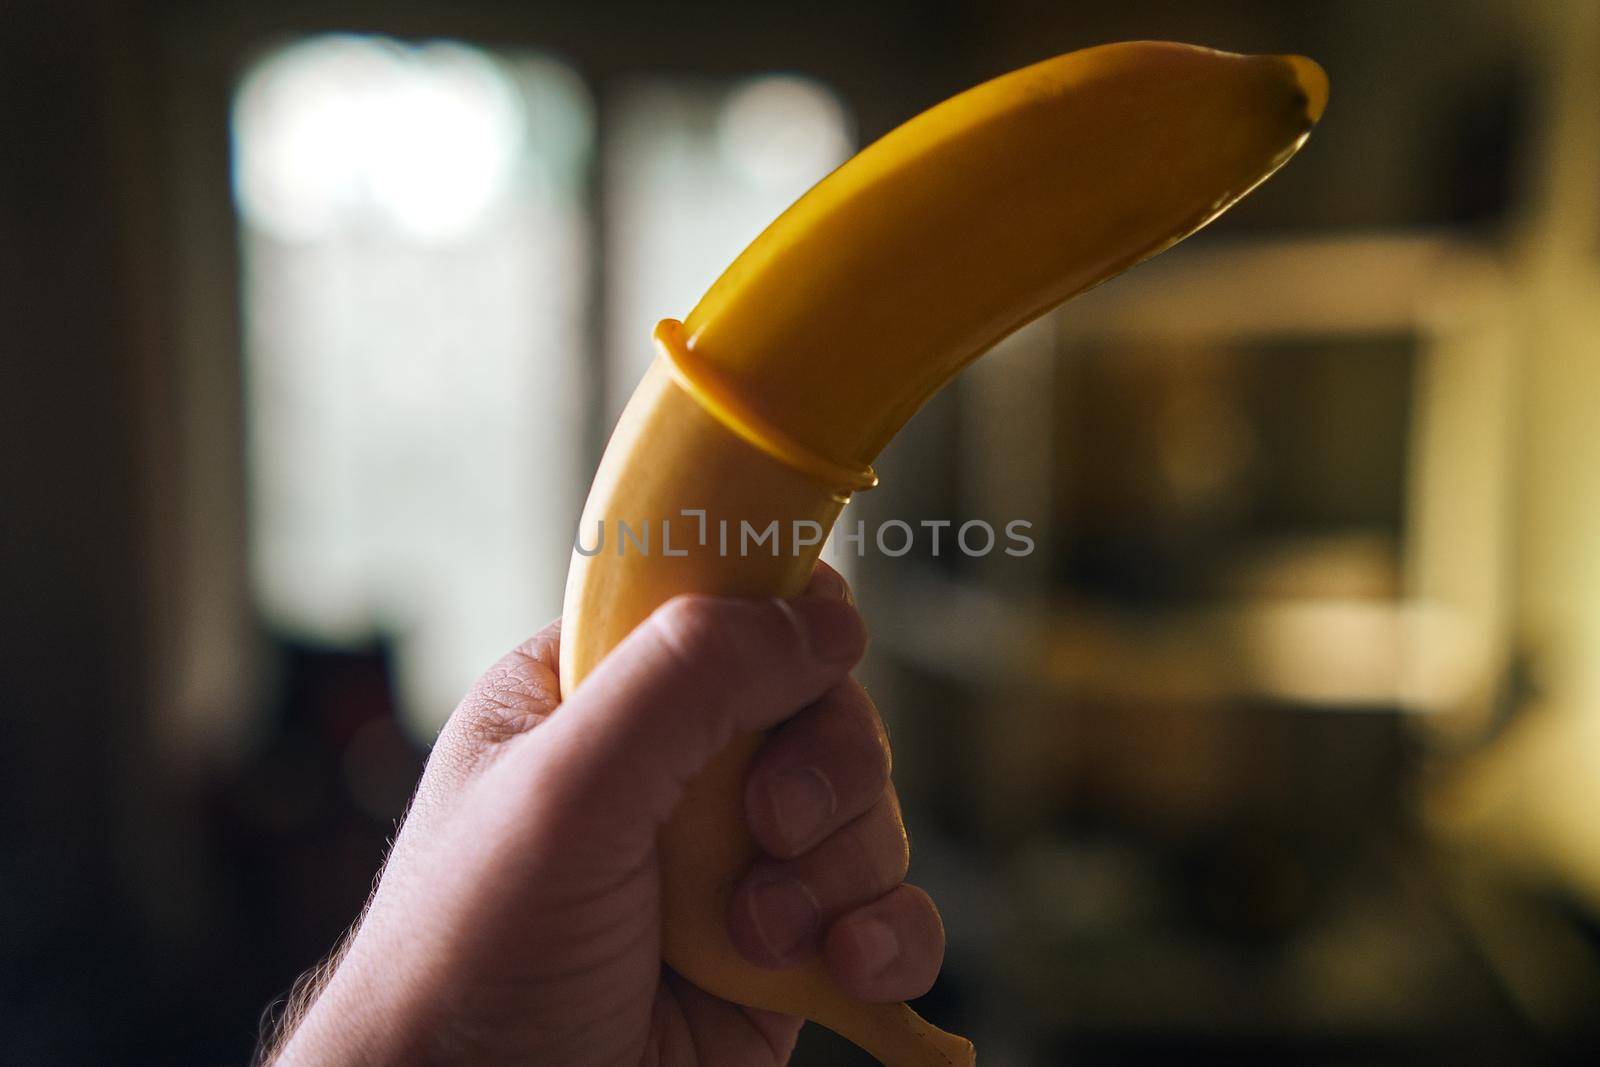 Condom and yellow banana by snep_photo